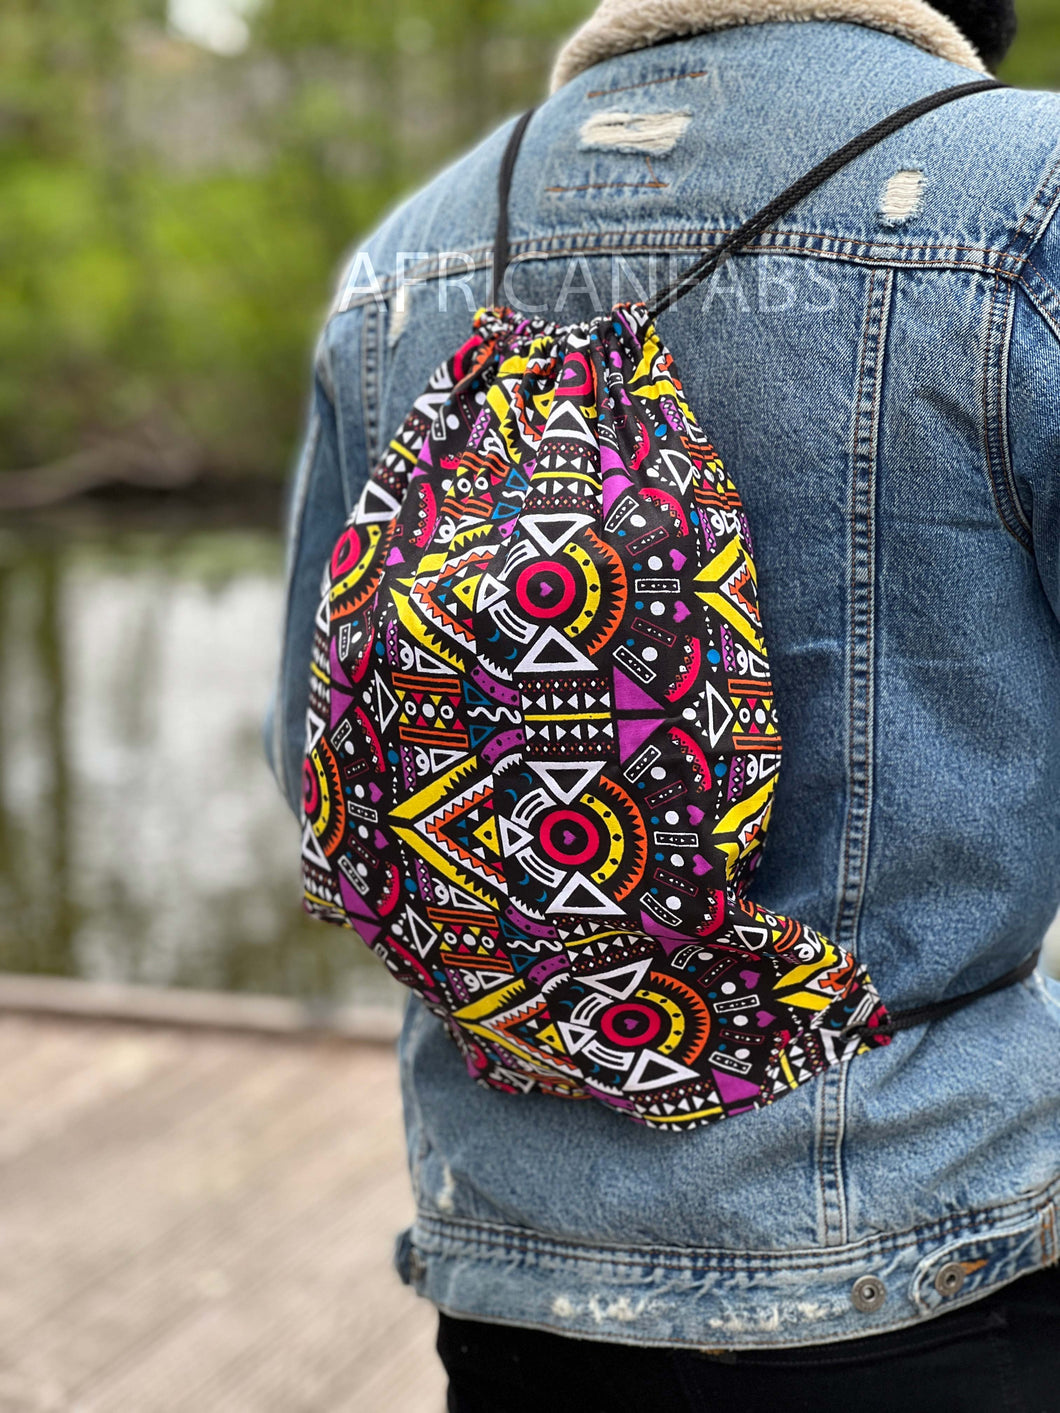 African Print Drawstring Bag / Gym Sack / School bag / Ankara Backpack / Festival Bag -  Yellow / purple bogolan